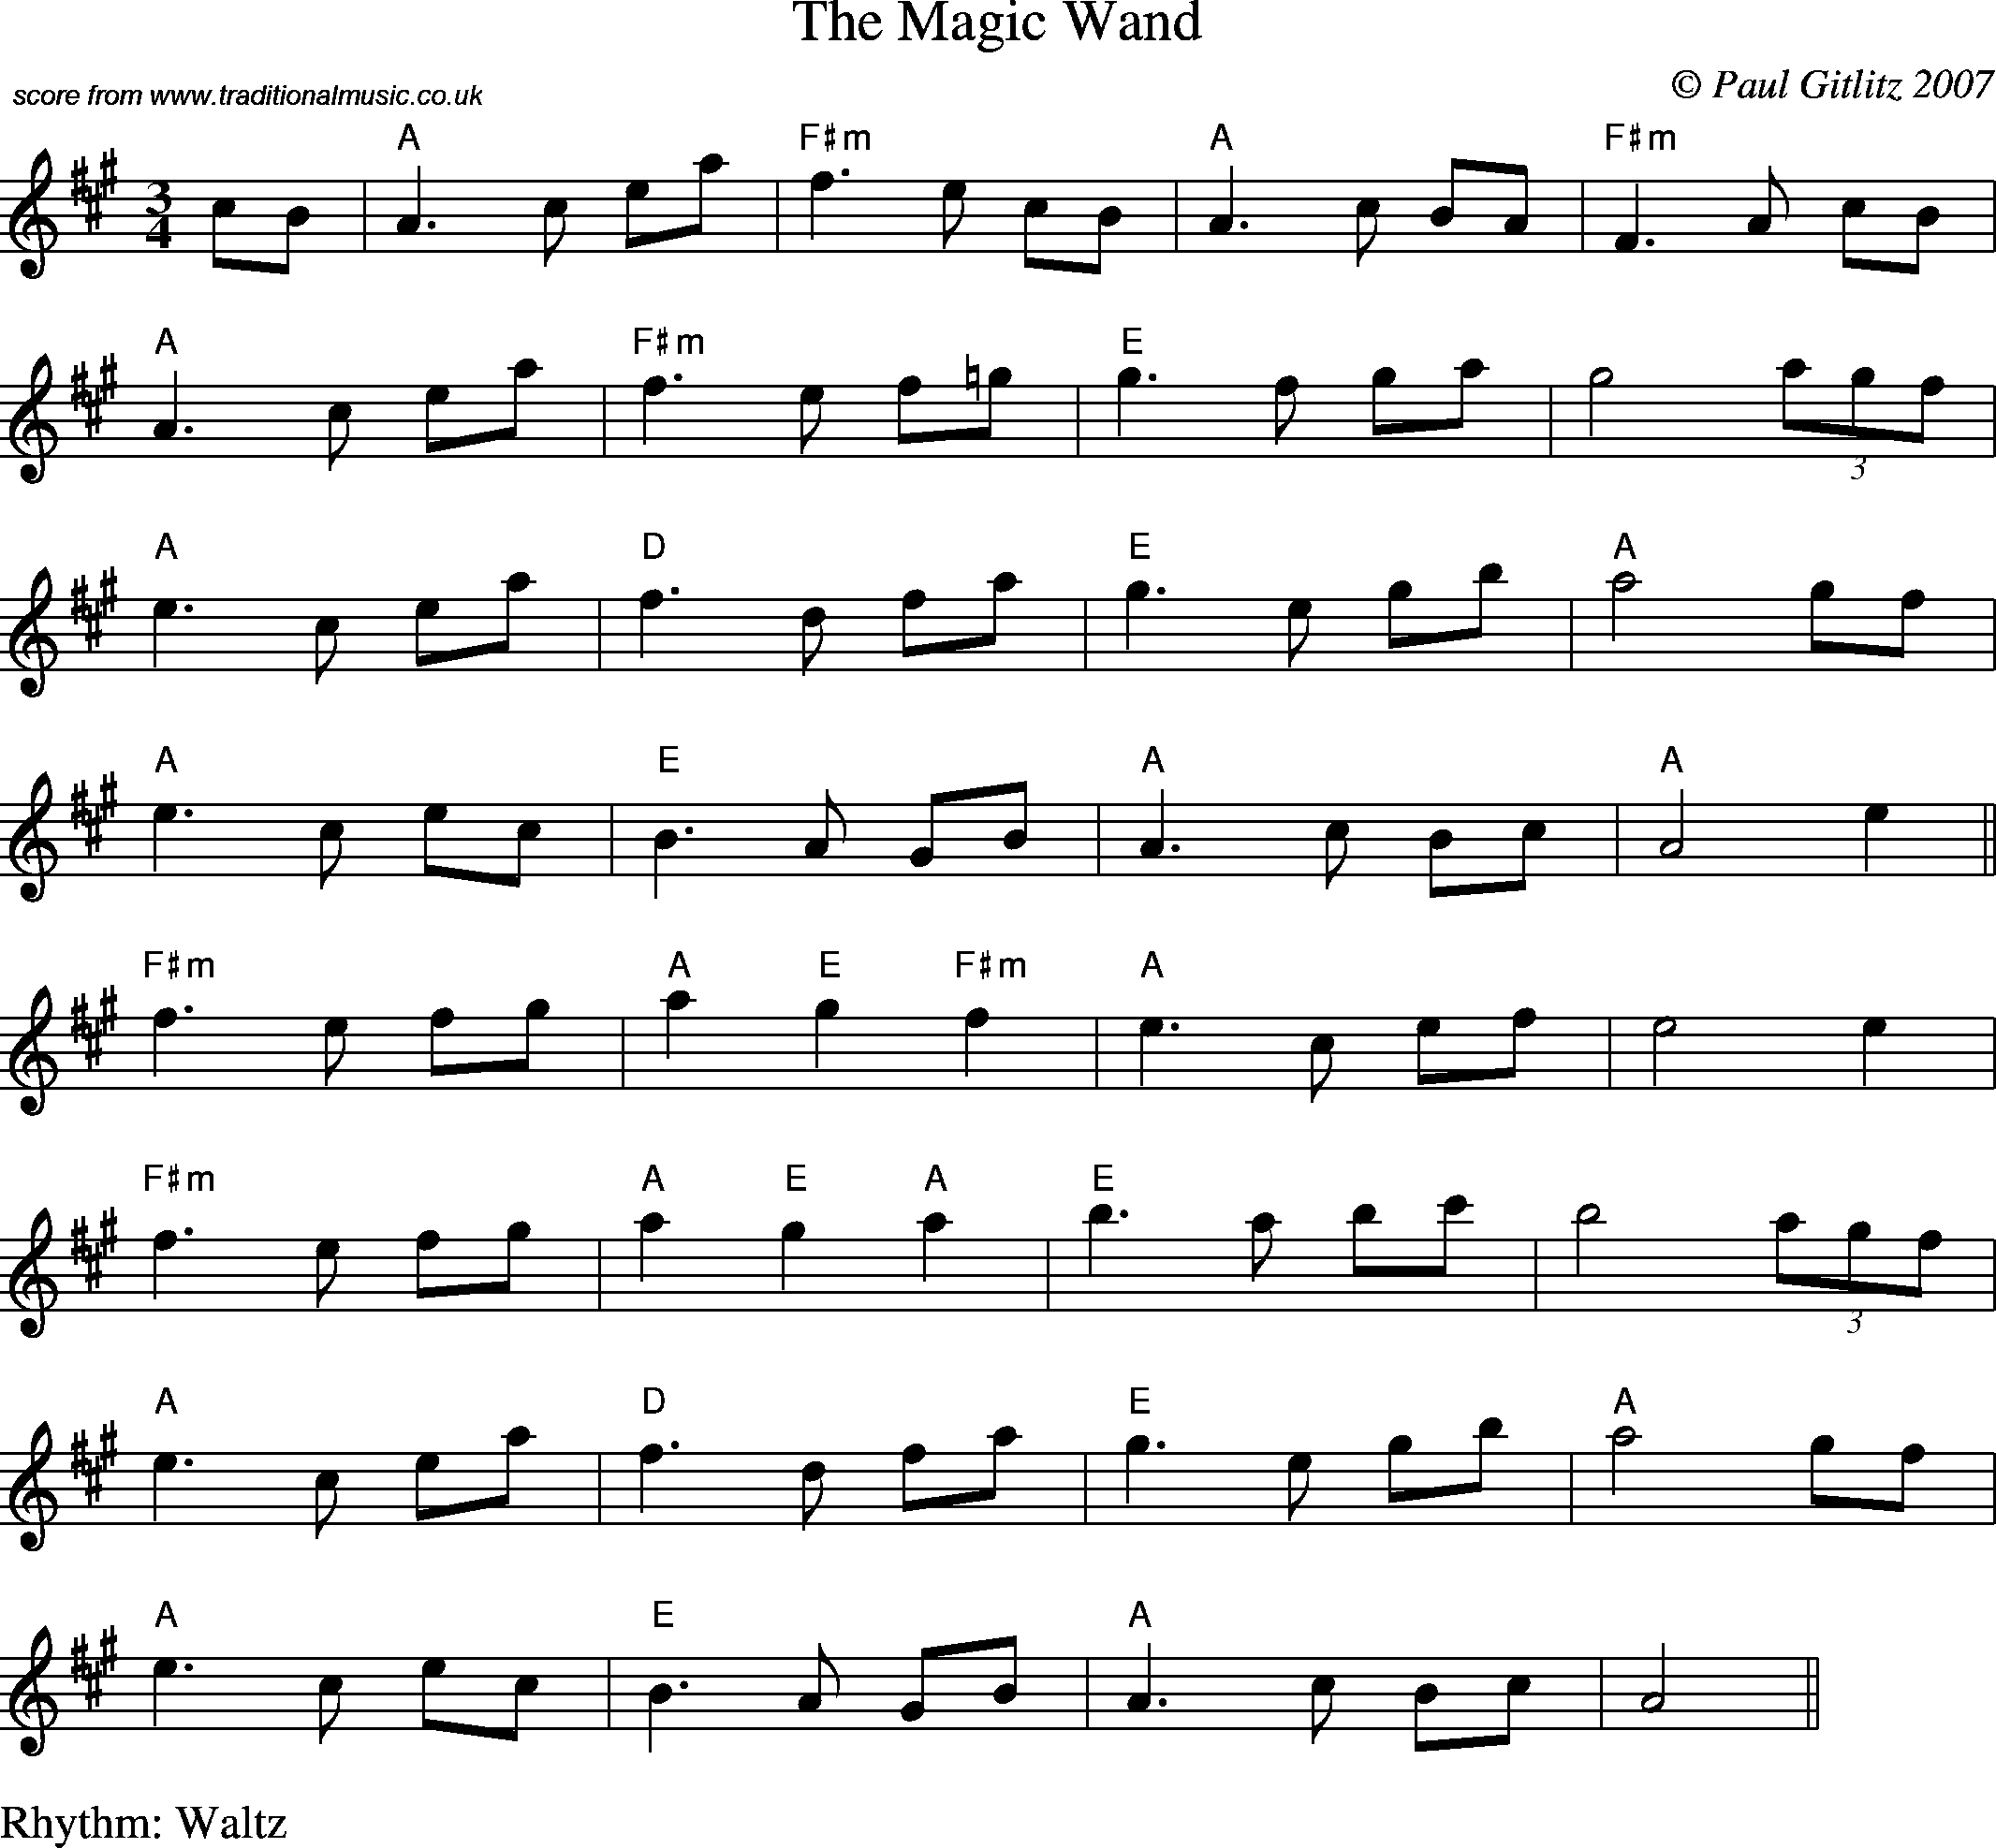 Sheet Music Score for Waltz - Magic Wand, The.abc